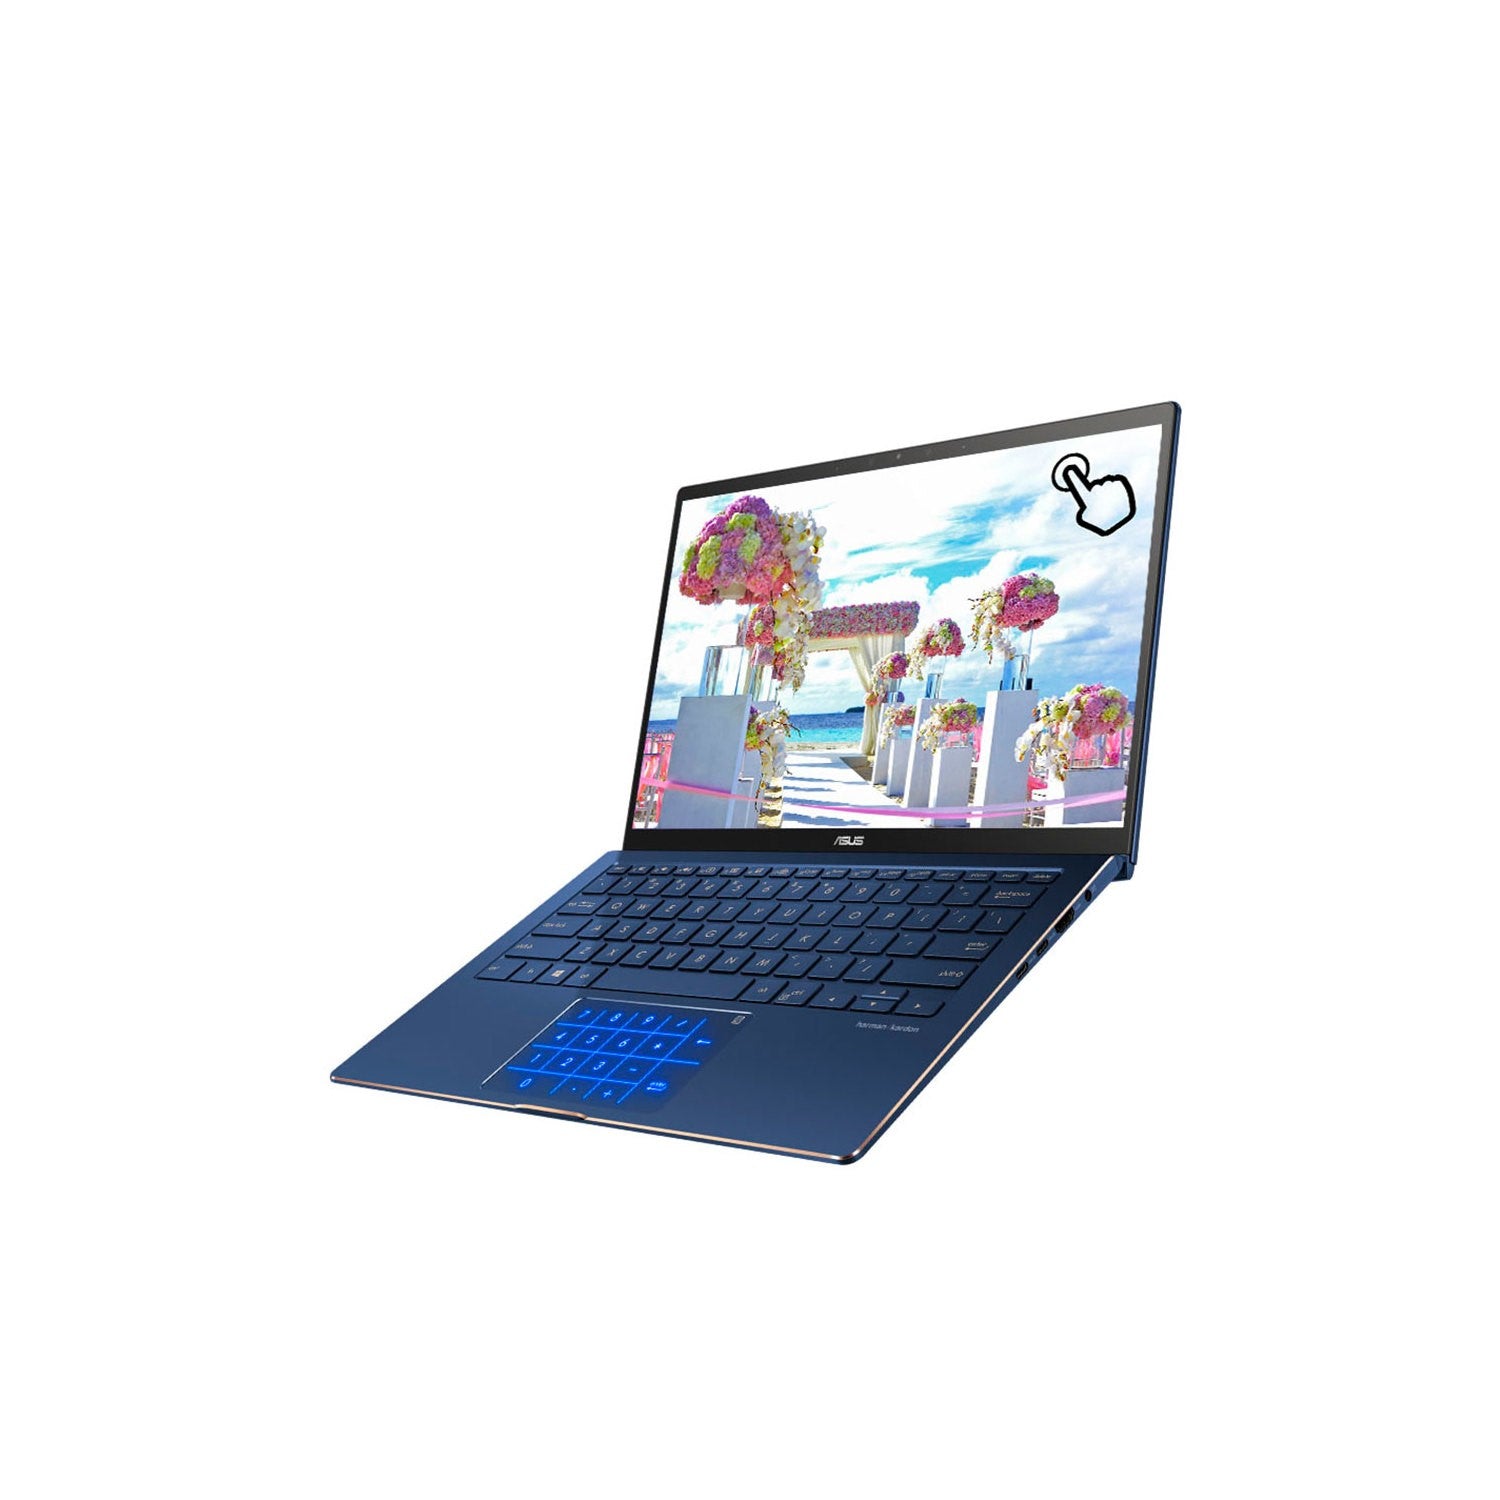 ASUS ZenBook UX362FA-EL142T Laptop Intel Core i5 8GB RAM 256GB SSD 13.3" - Royal Blue - Refurbished Pristine